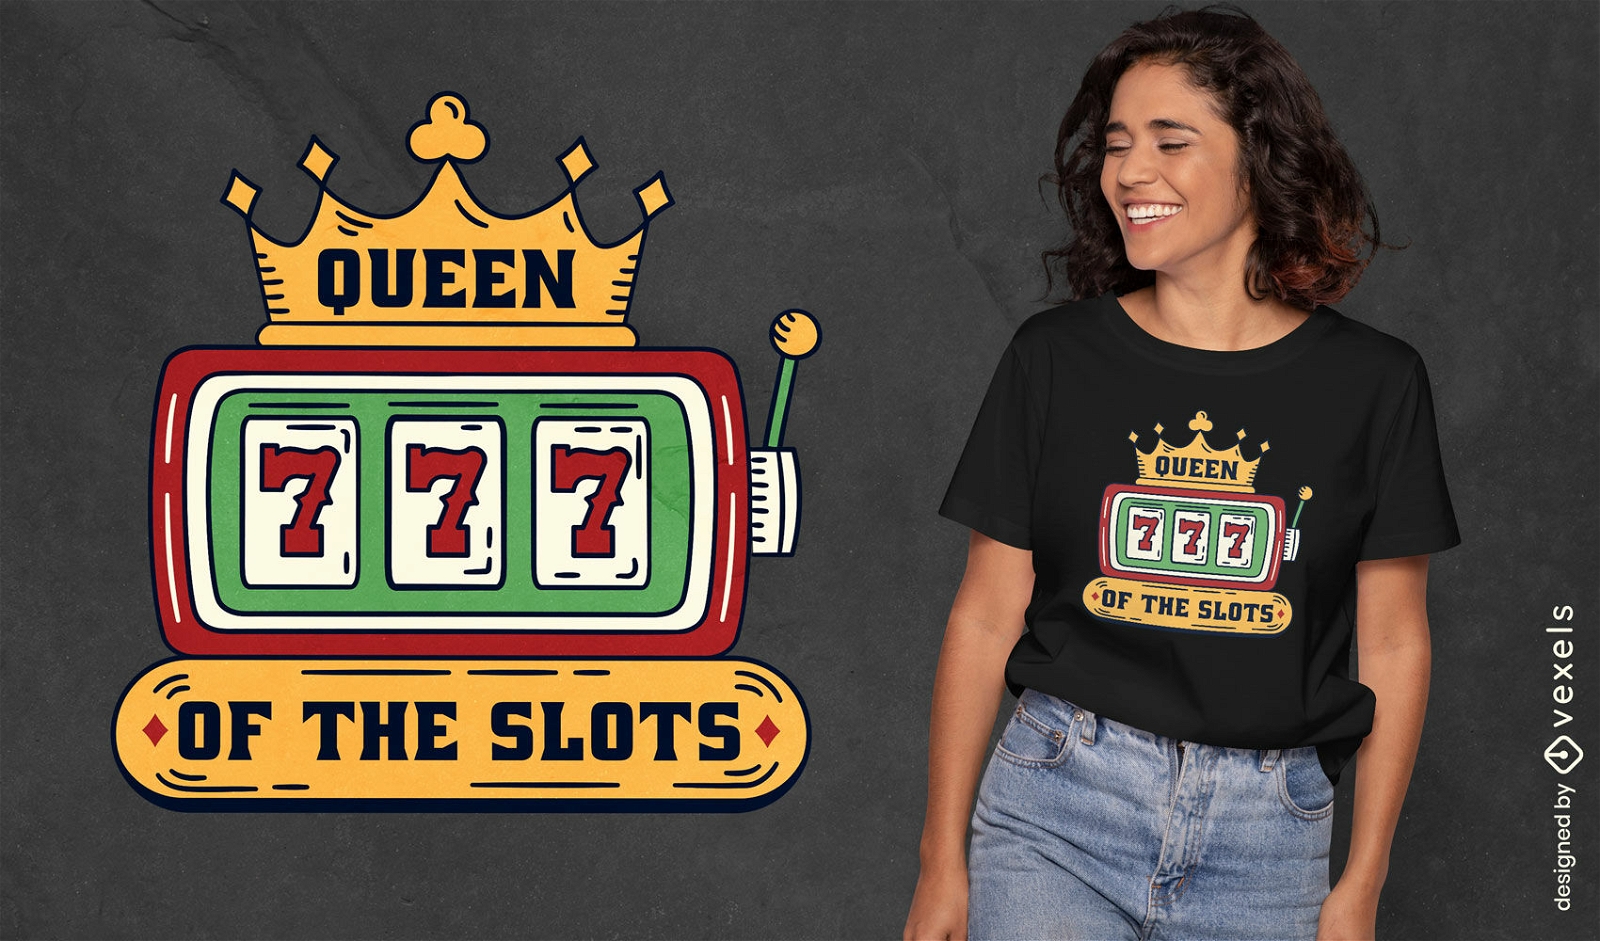 Queen of slot machines t-shirt design